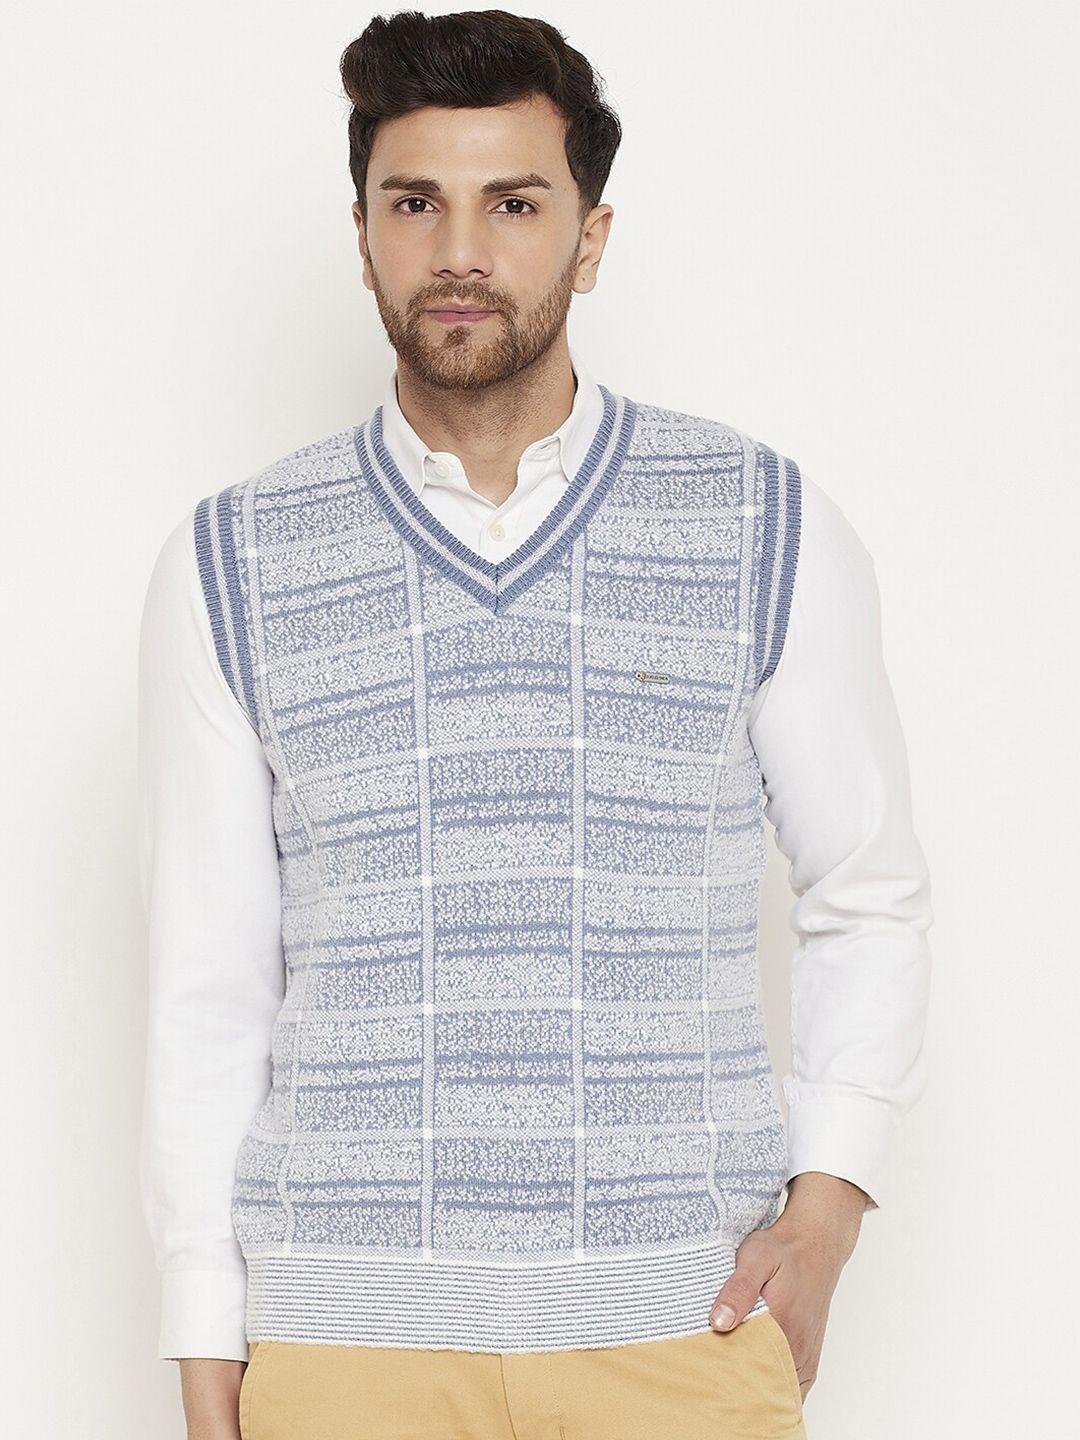 duke checked v-neck acrylic sweater vest